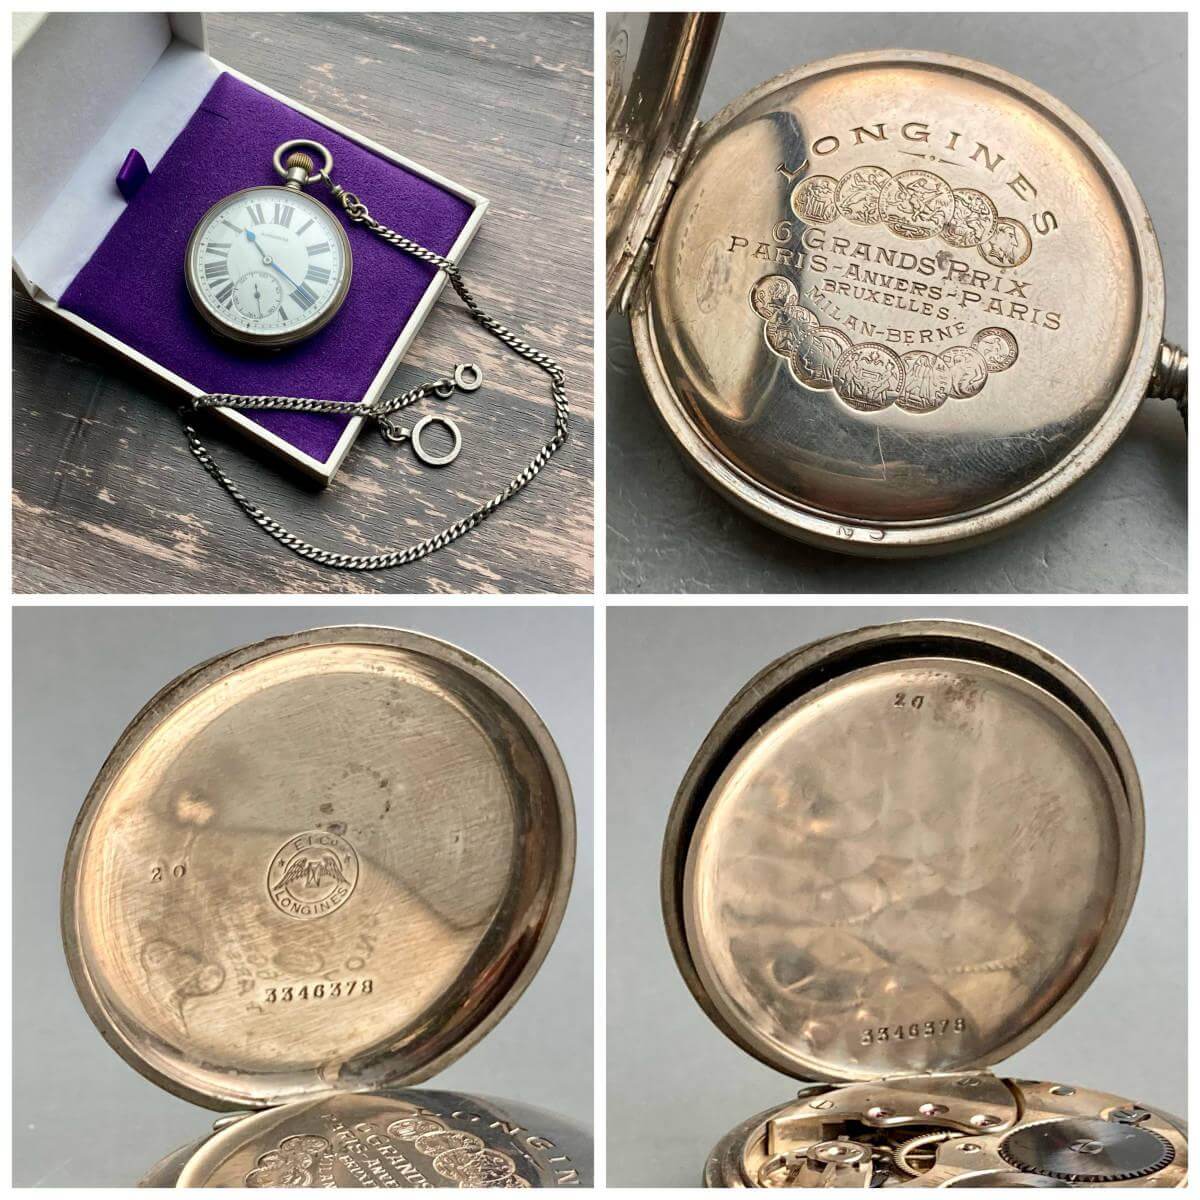 Longines Pocket Watch Antique Manual Open Face Roman 43mm - Murphy Johnson Watches Co.